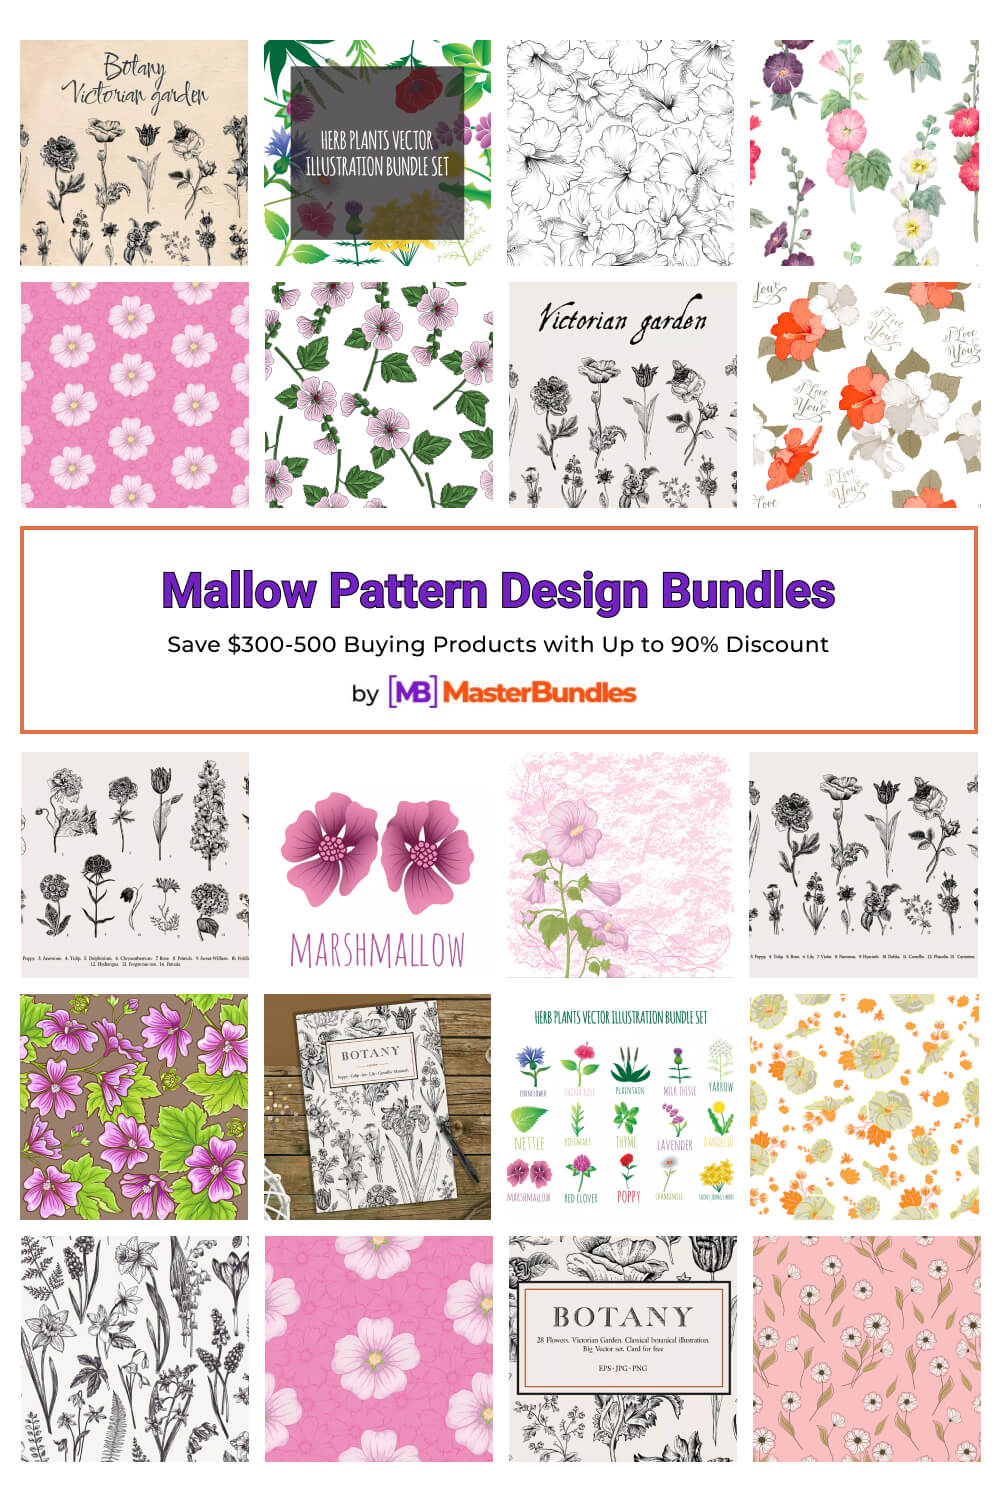 mallow pattern design bundles pinterest image.